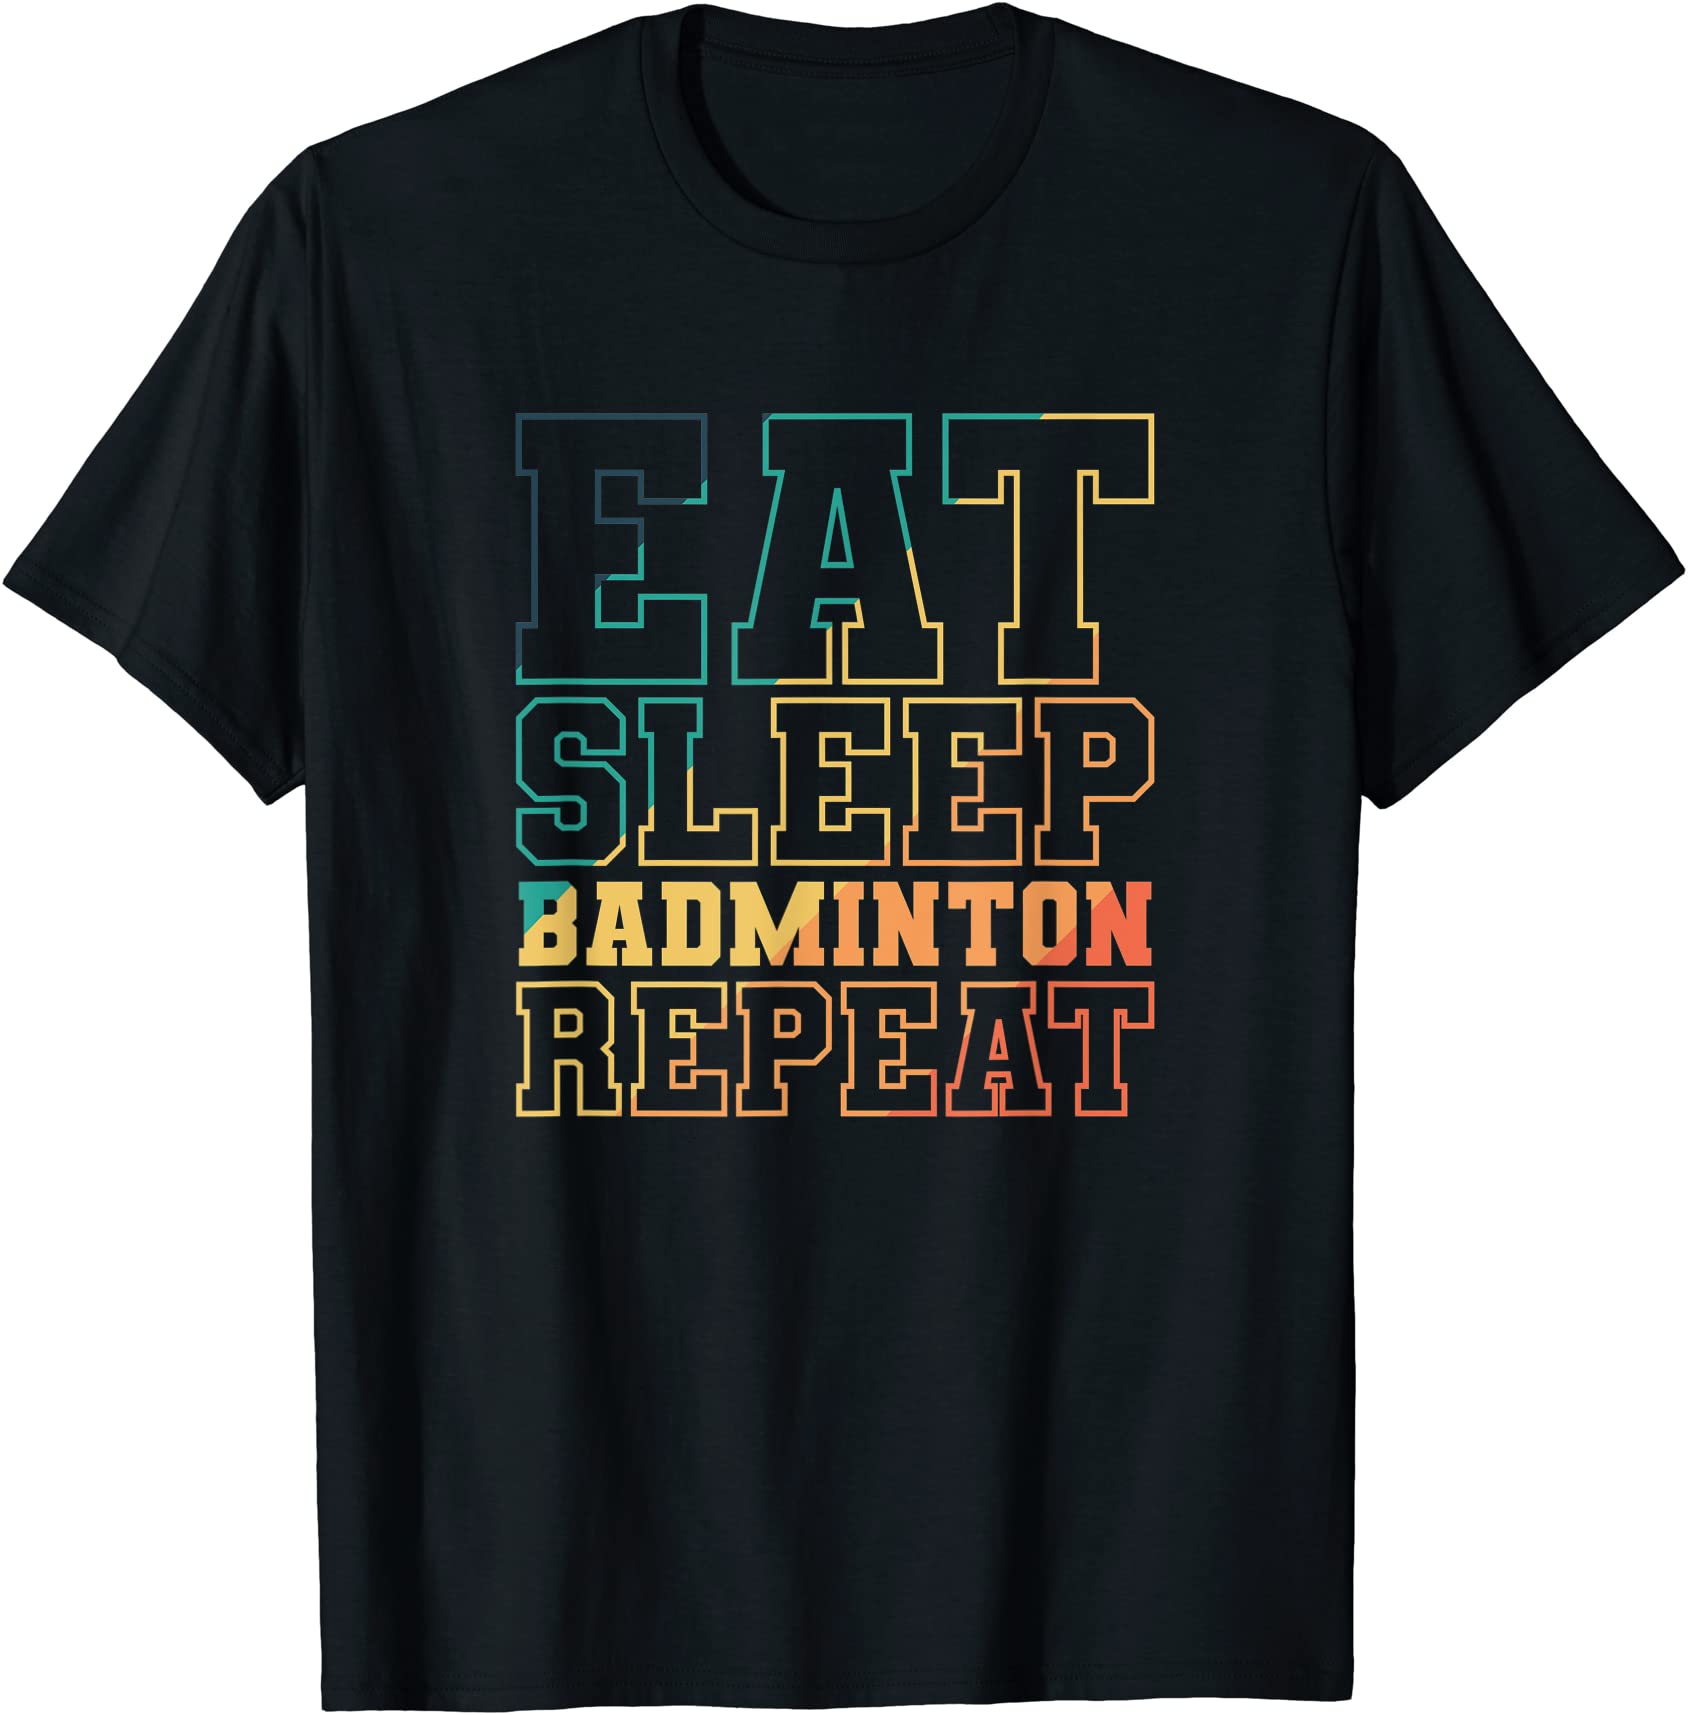 eat sleep badminton repeat shuttlecock sport t shirt men - Buy t-shirt ...